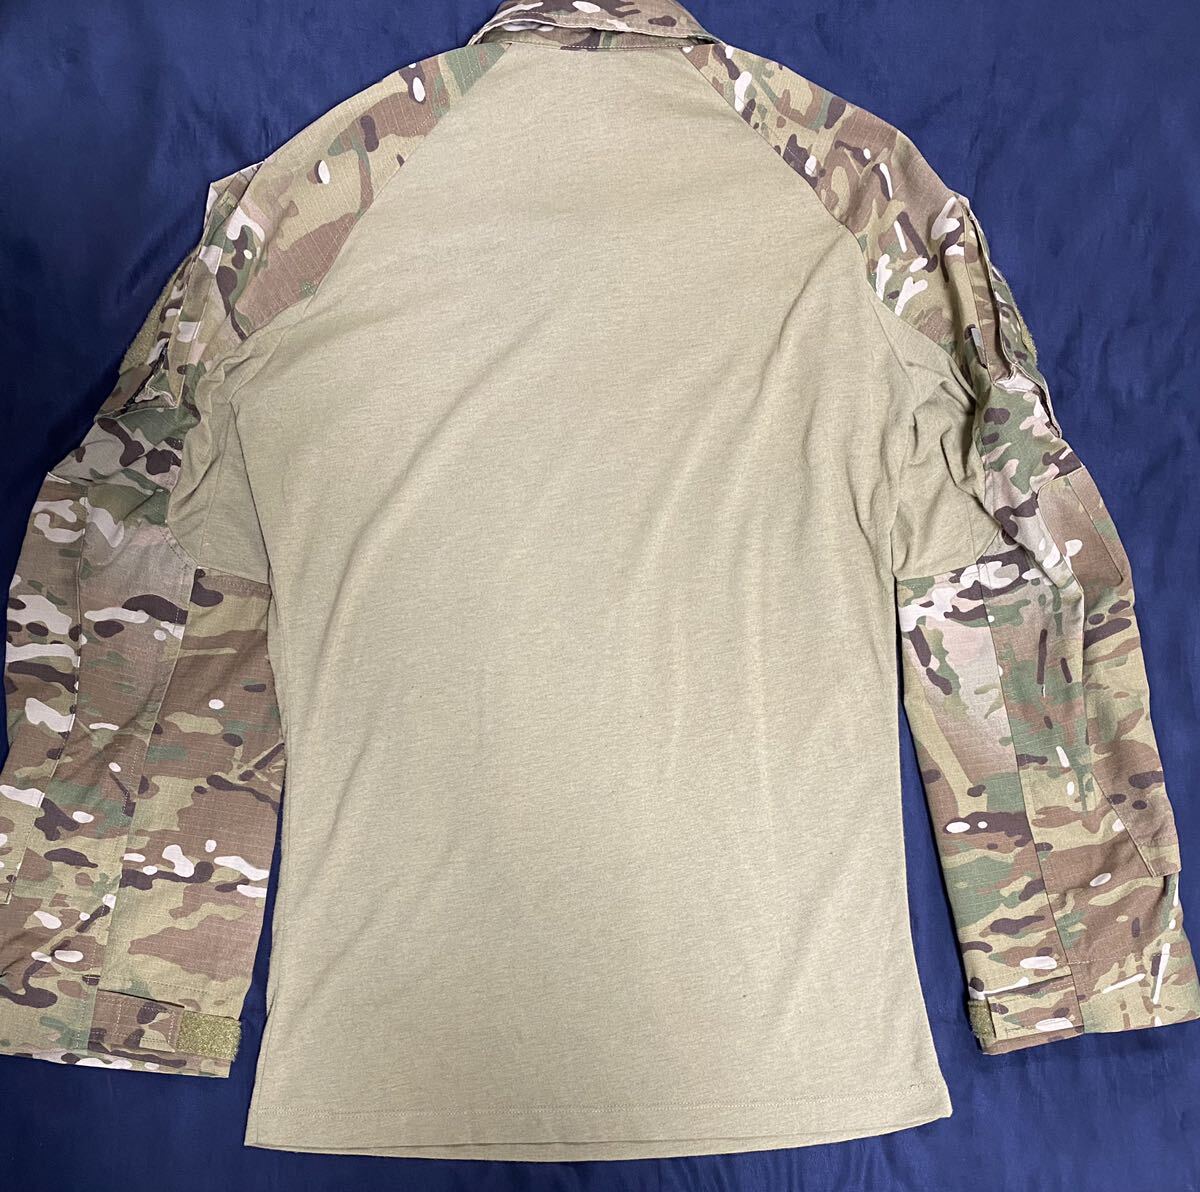  оригинал Crye G3 Combat Shirt SM-R combat рубашка мульти- cam Multicam Crye Precision Small IR флаг patch BritkitUSA